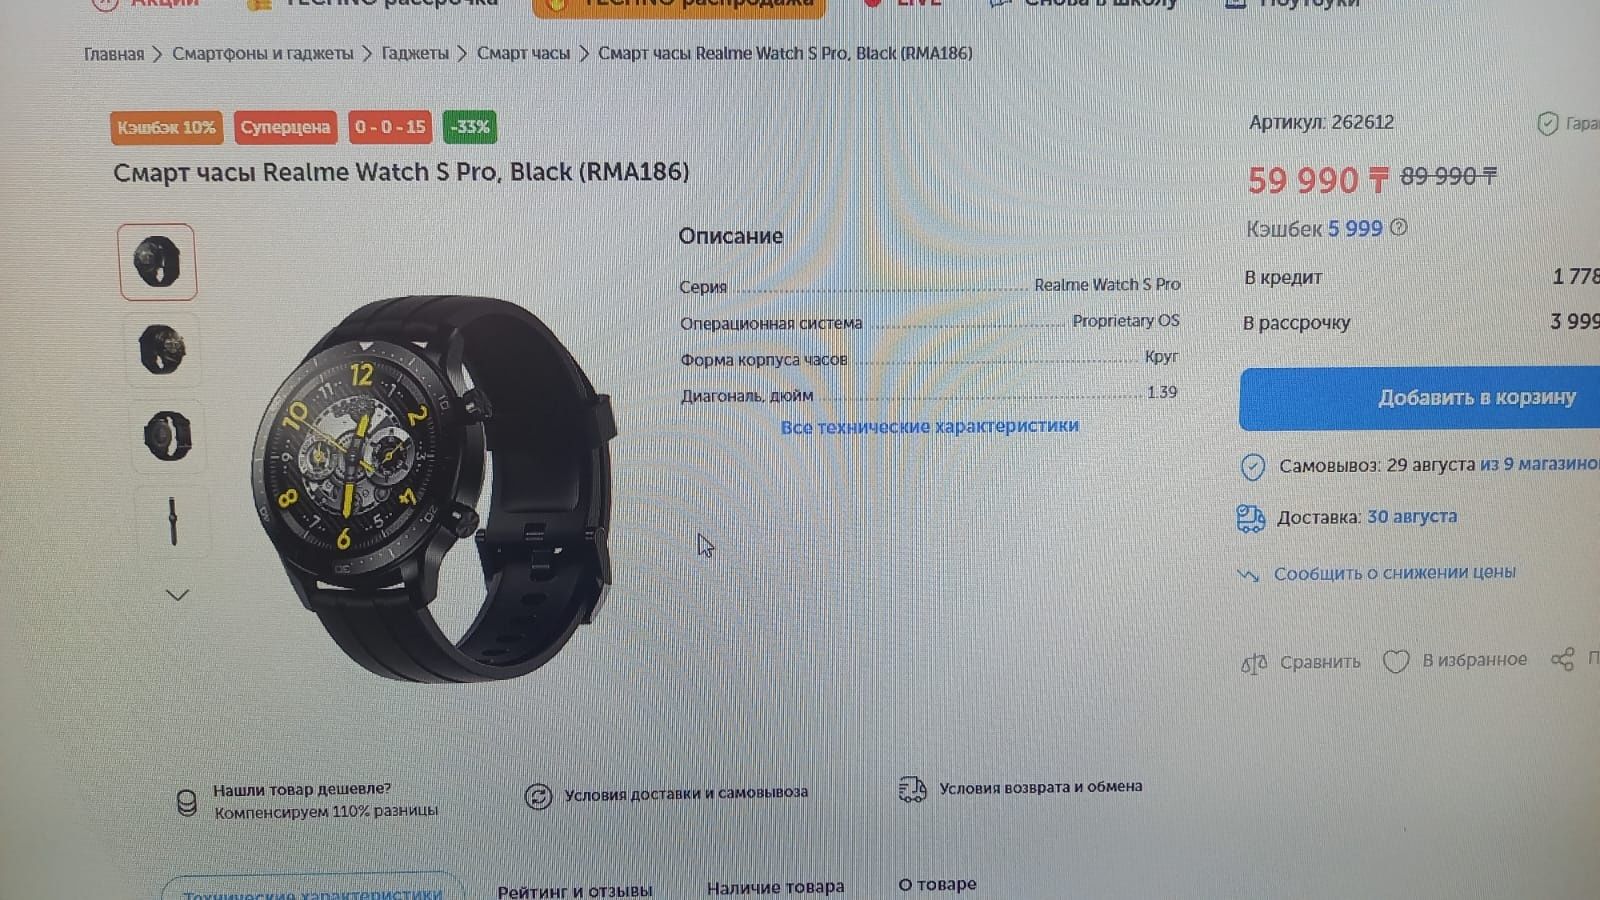 Смарт часы Realme Watch S Pro, Black (RMA186